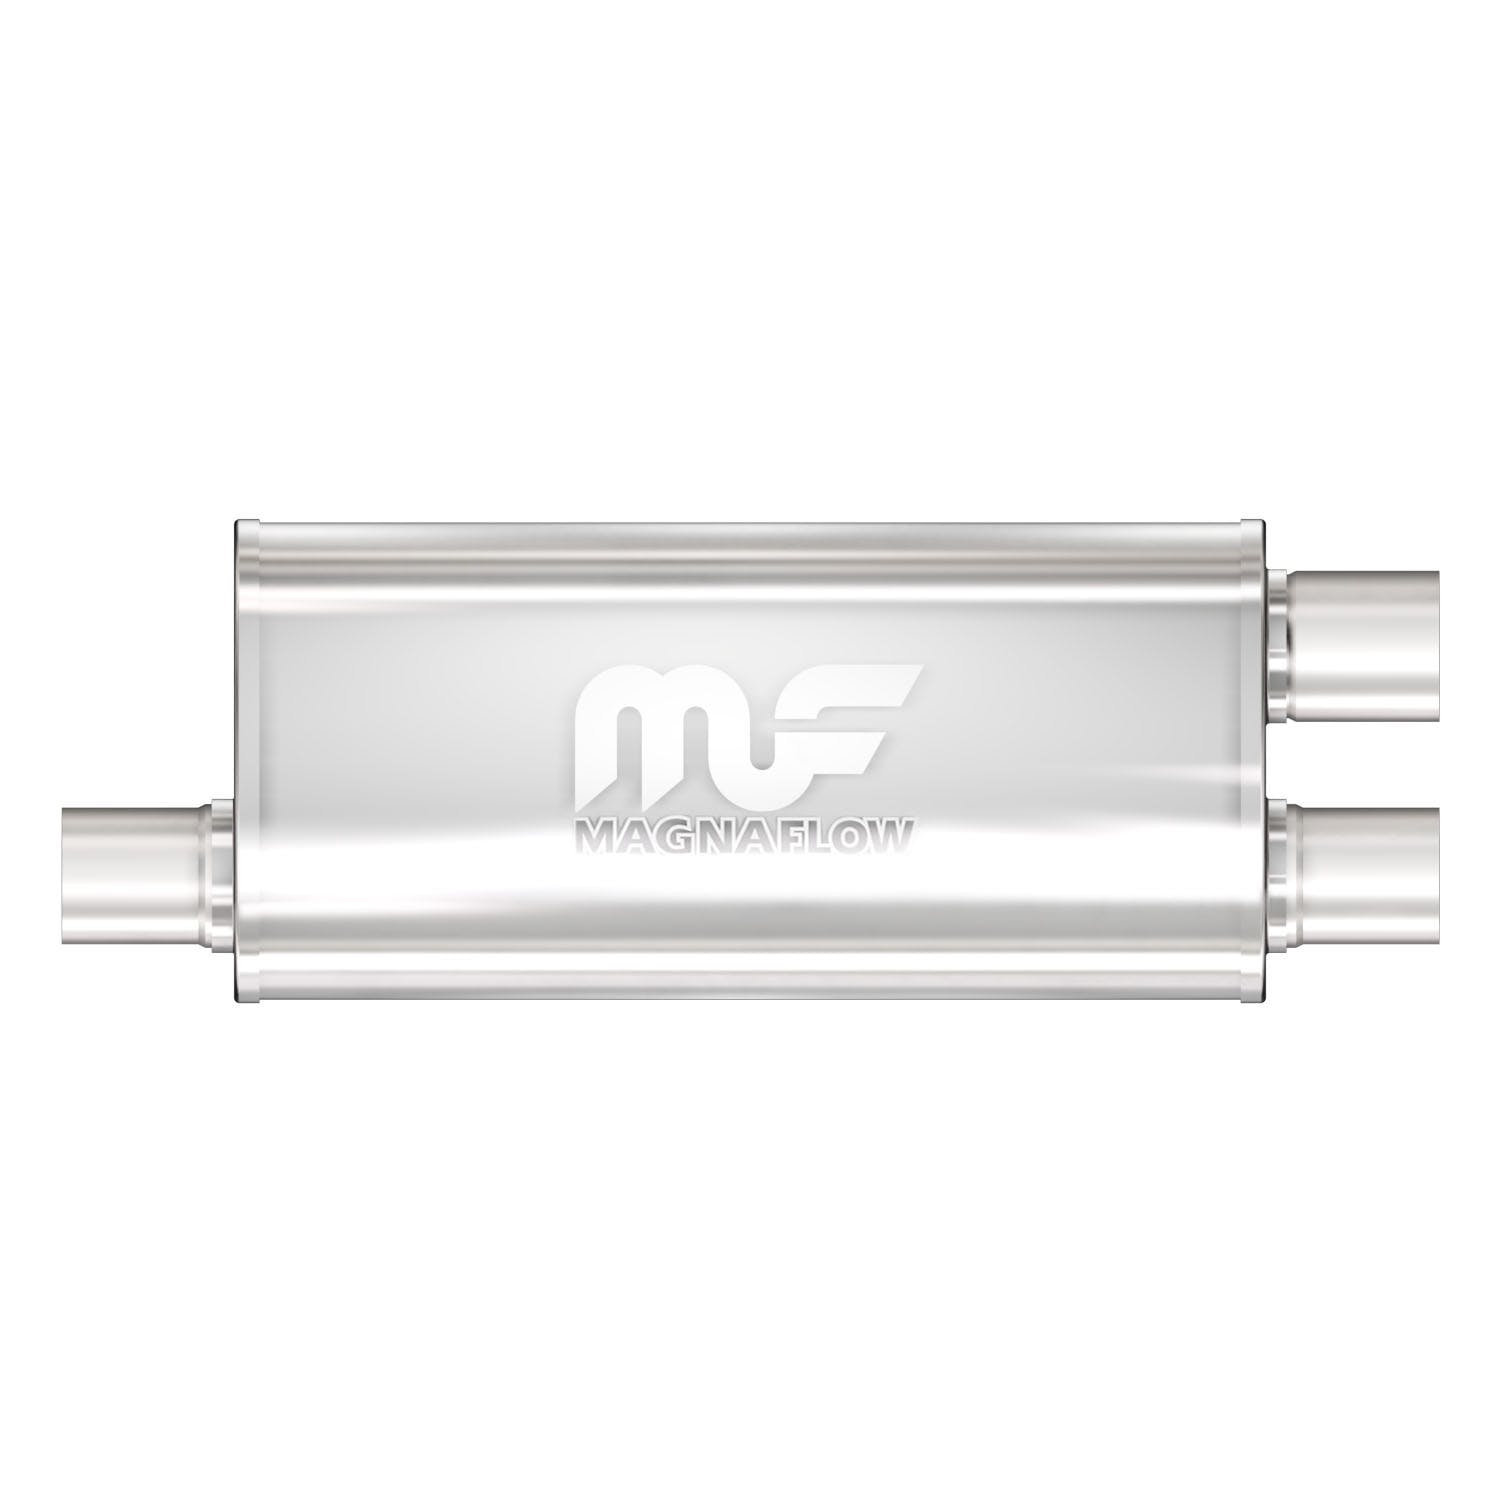 MagnaFlow Exhaust Products 14267 Universal Muffler